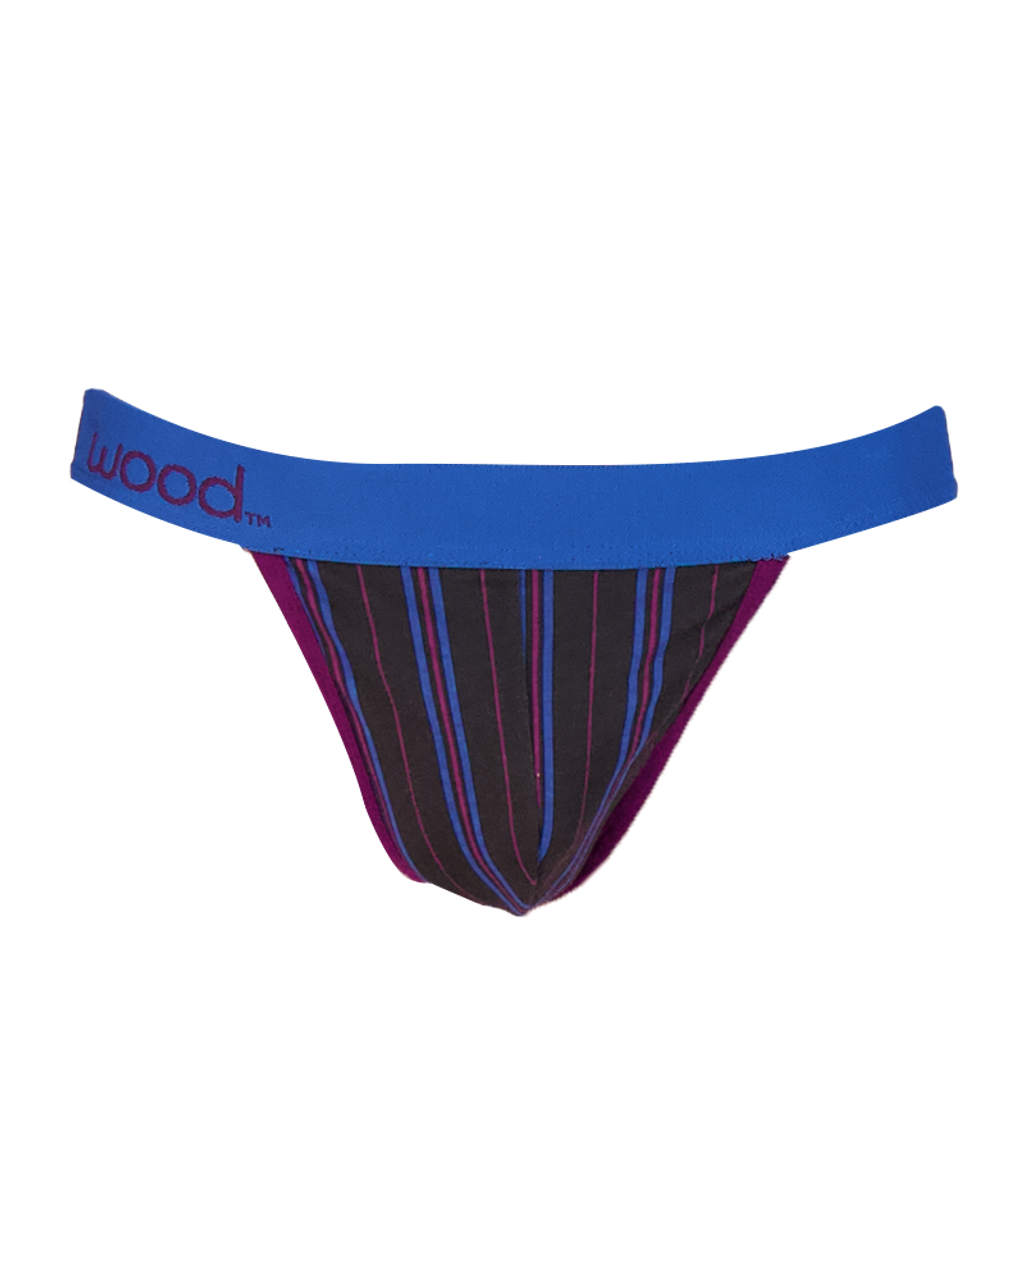 Thong in Triple Threat Stripe by Wood Underwear